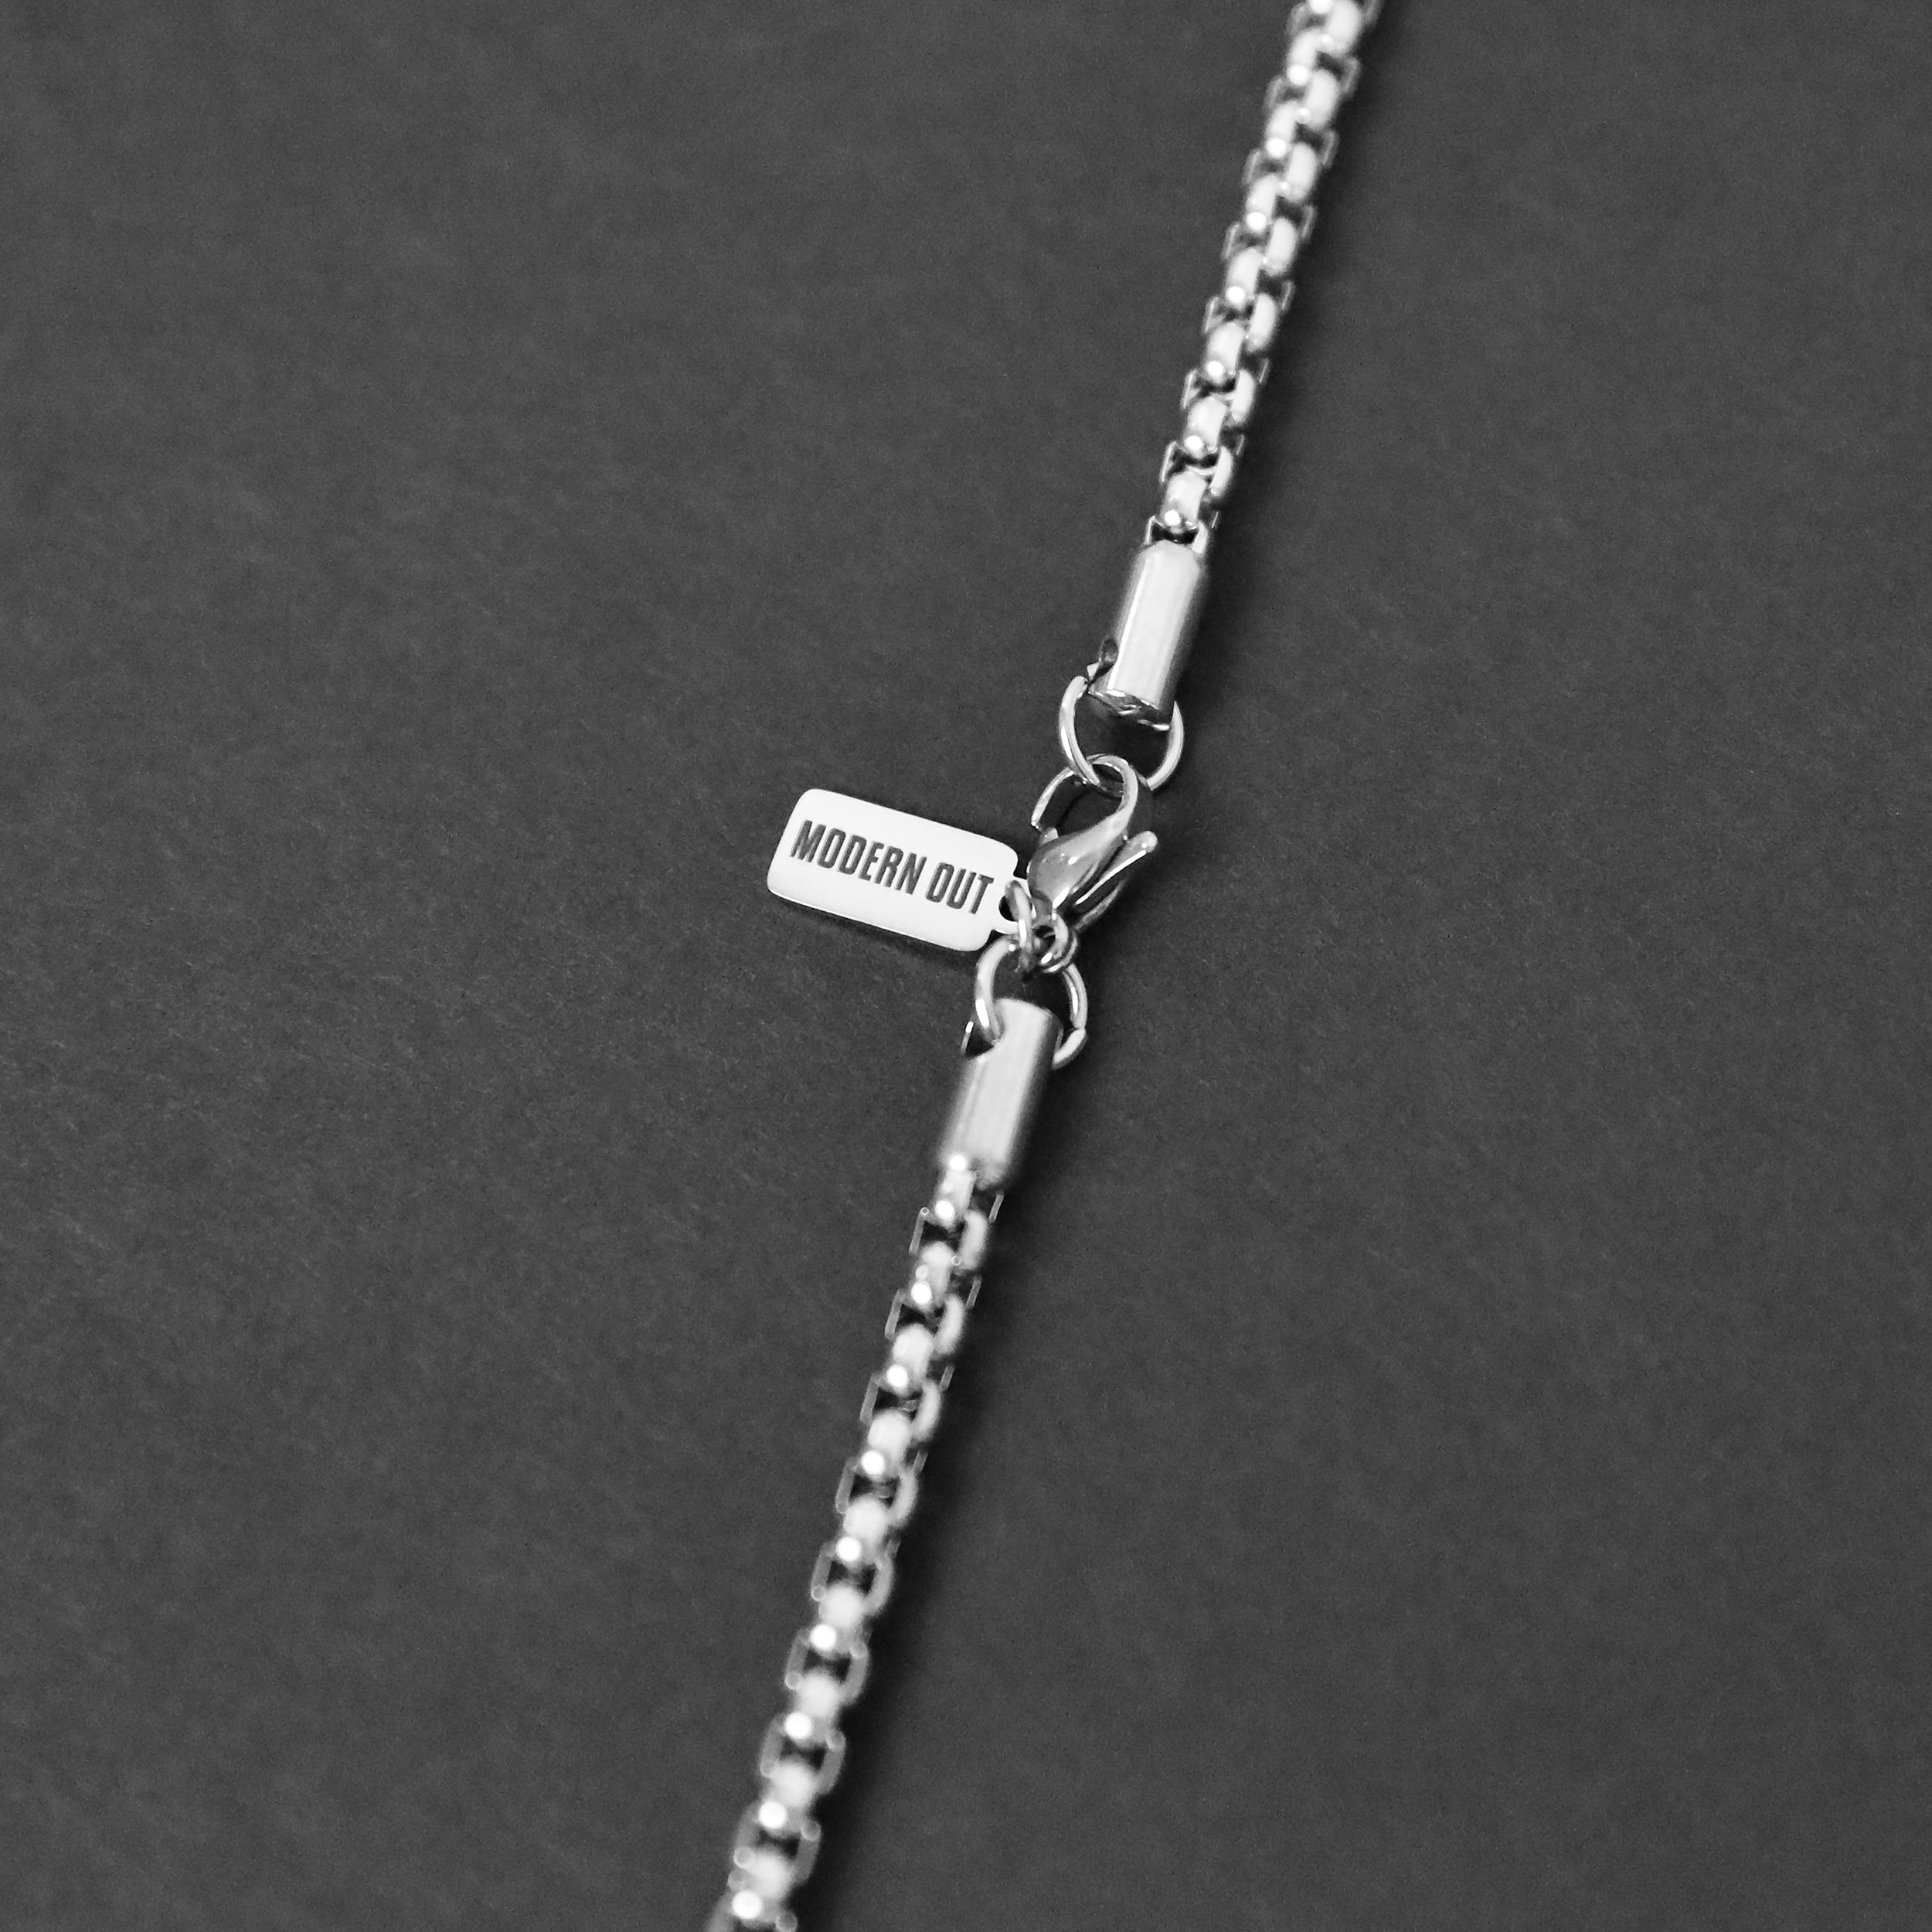 Box Chain Necklace - Silver 4mm